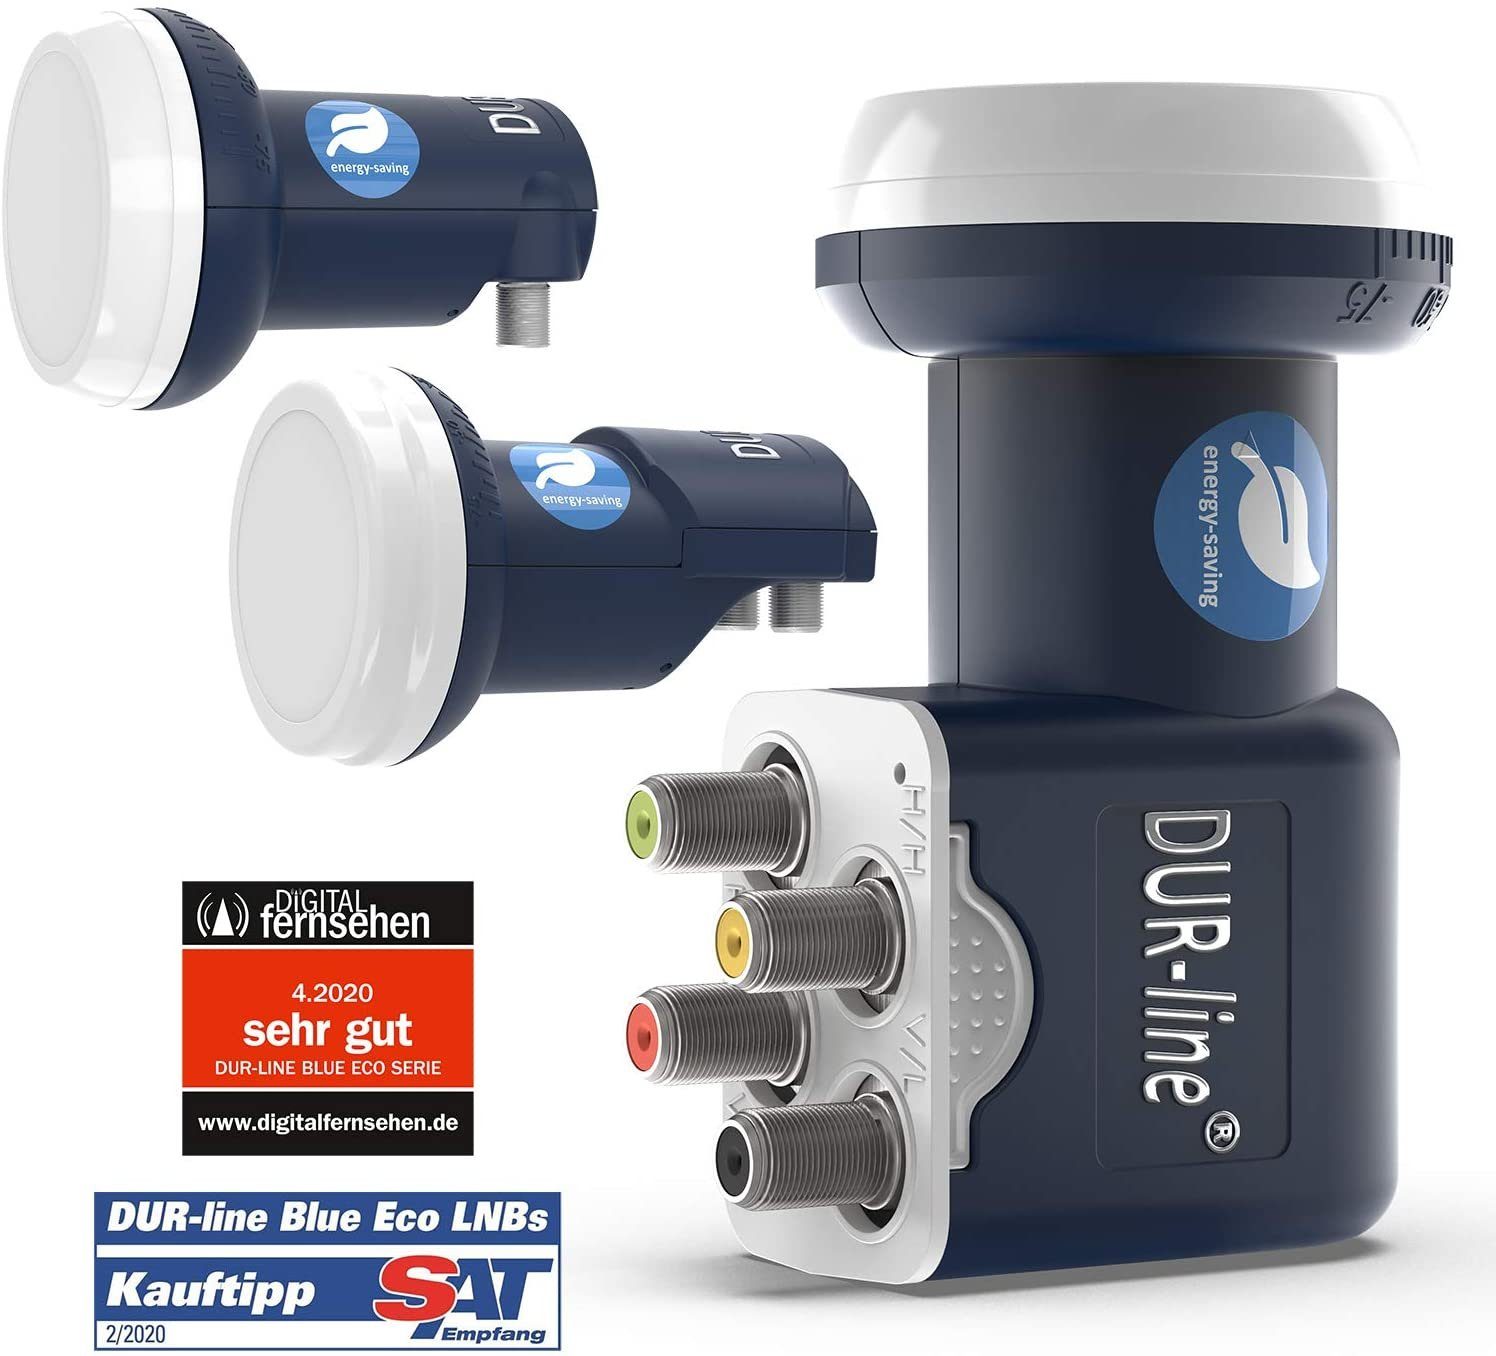 ECO Stromspar-LNB 2 DUR-line Blue Premium-Qualit - Twin Universal-Twin-LNB DUR-line - - Teilnehmer